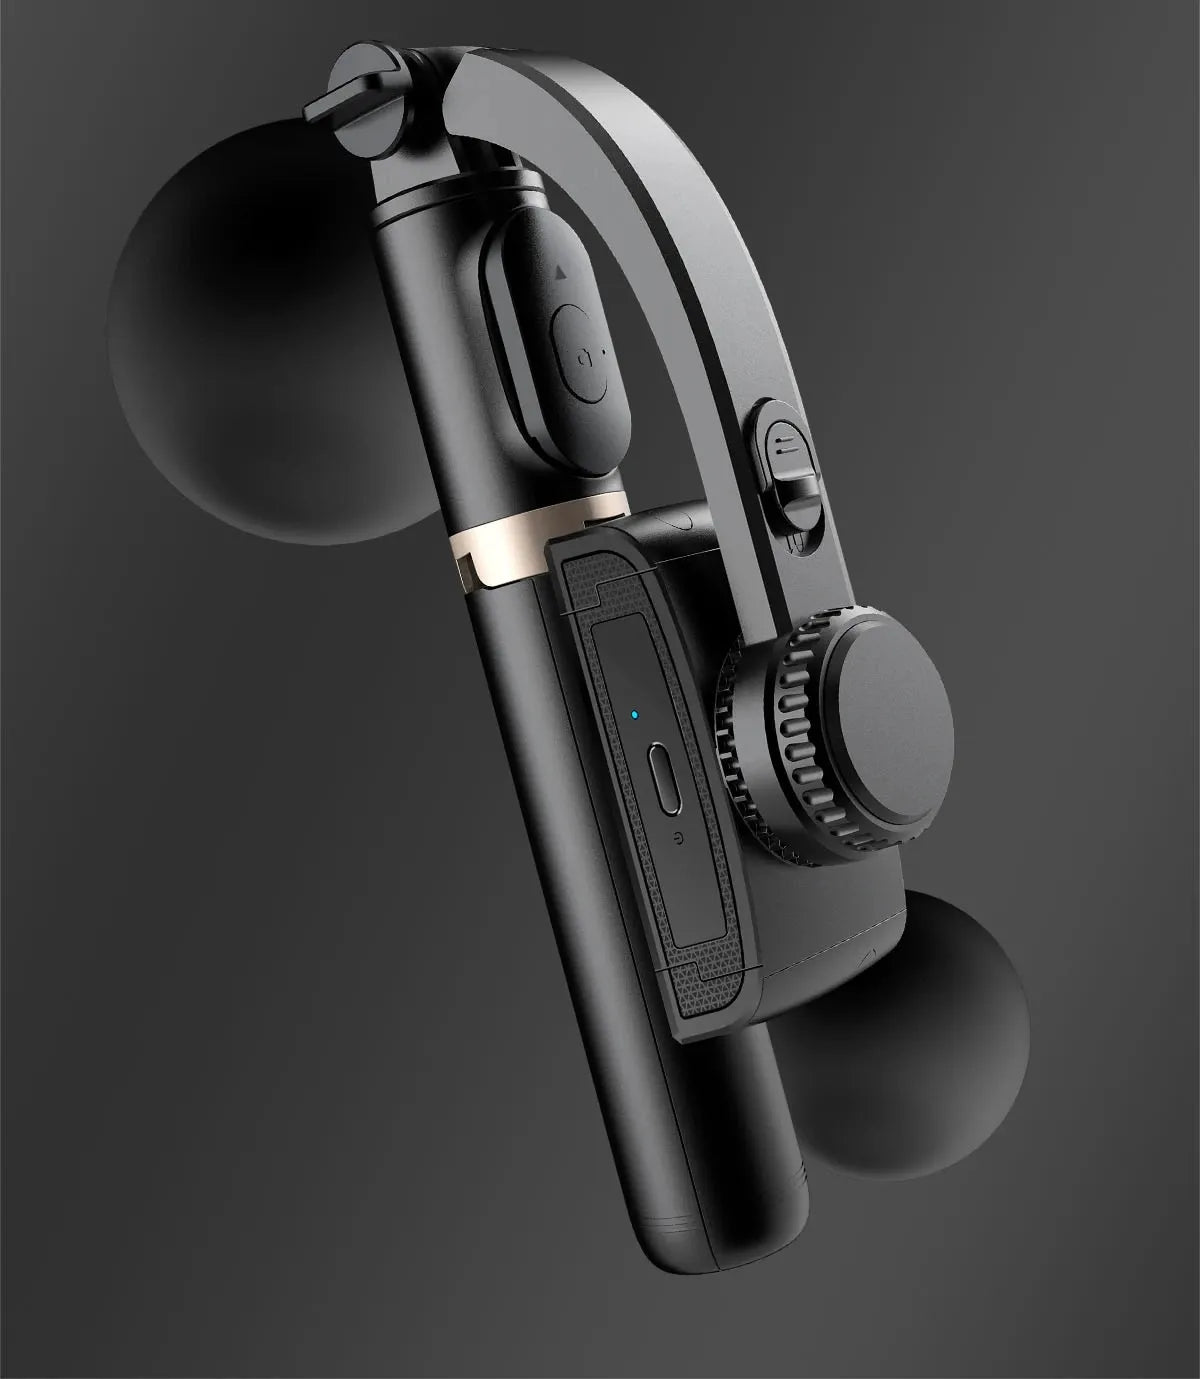 COOL DIER 2023 NEW Phone Gimbal stabilizer Wireless Bluetooth selfie stick tripod Stabilizer holder bracket For Smartphone live